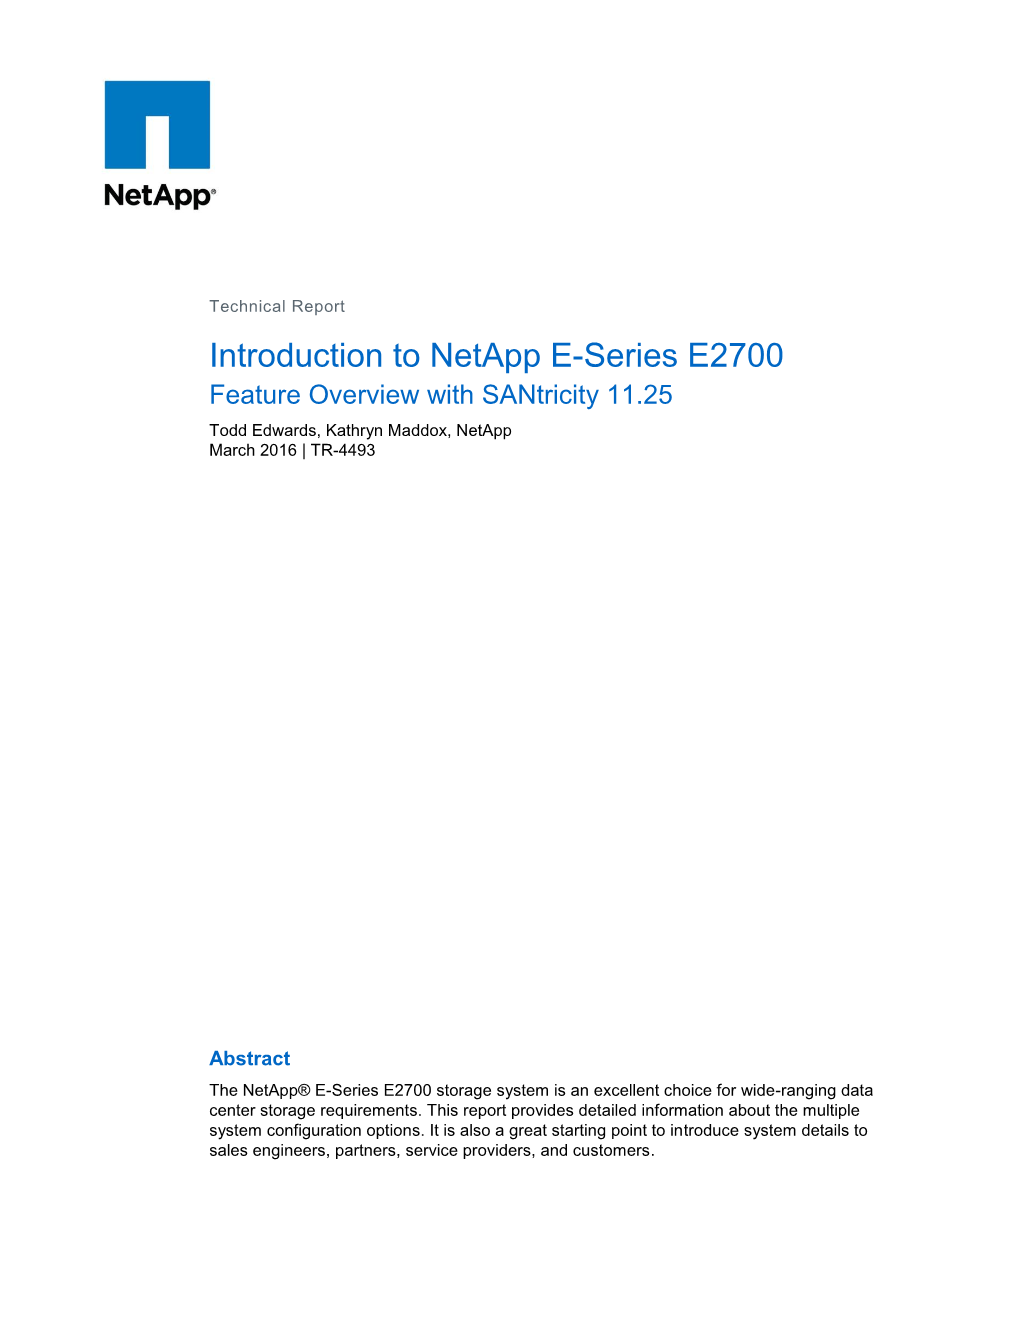 Introduction to Netapp E-Series E2700 with Santricity 11.25